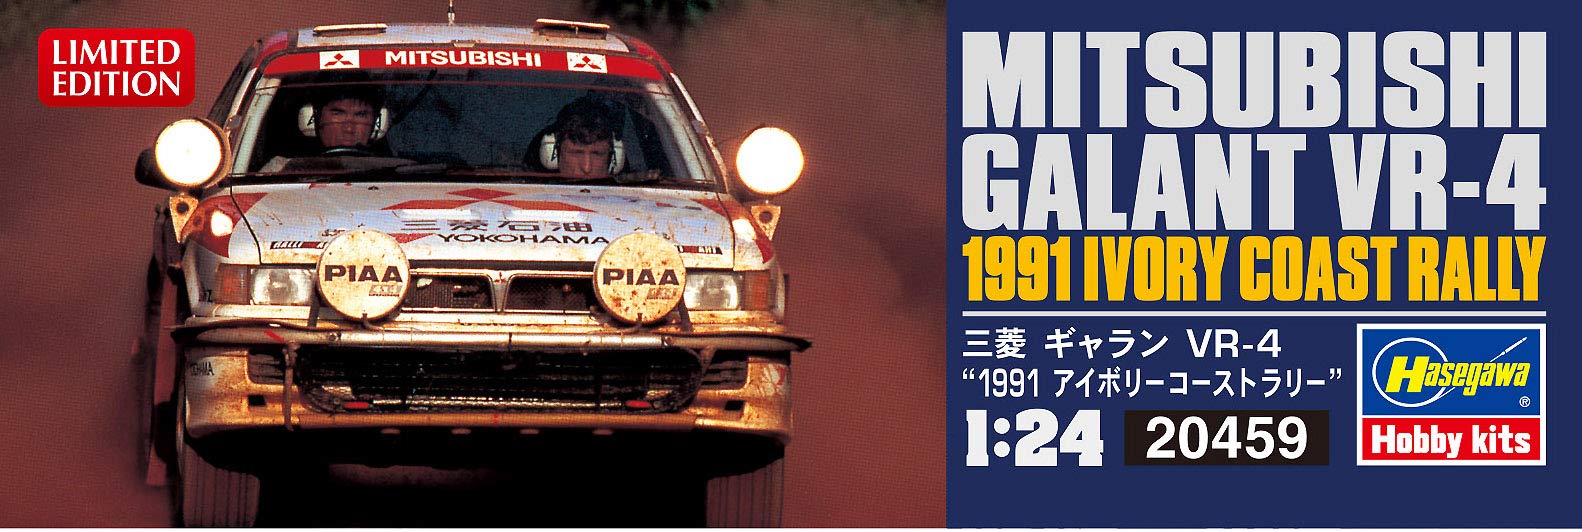 Hasegawa 1/24 Mitsubishi Galant Vr-4 1991 Côte d'Ivoire Rally Plastique Modèle 20459